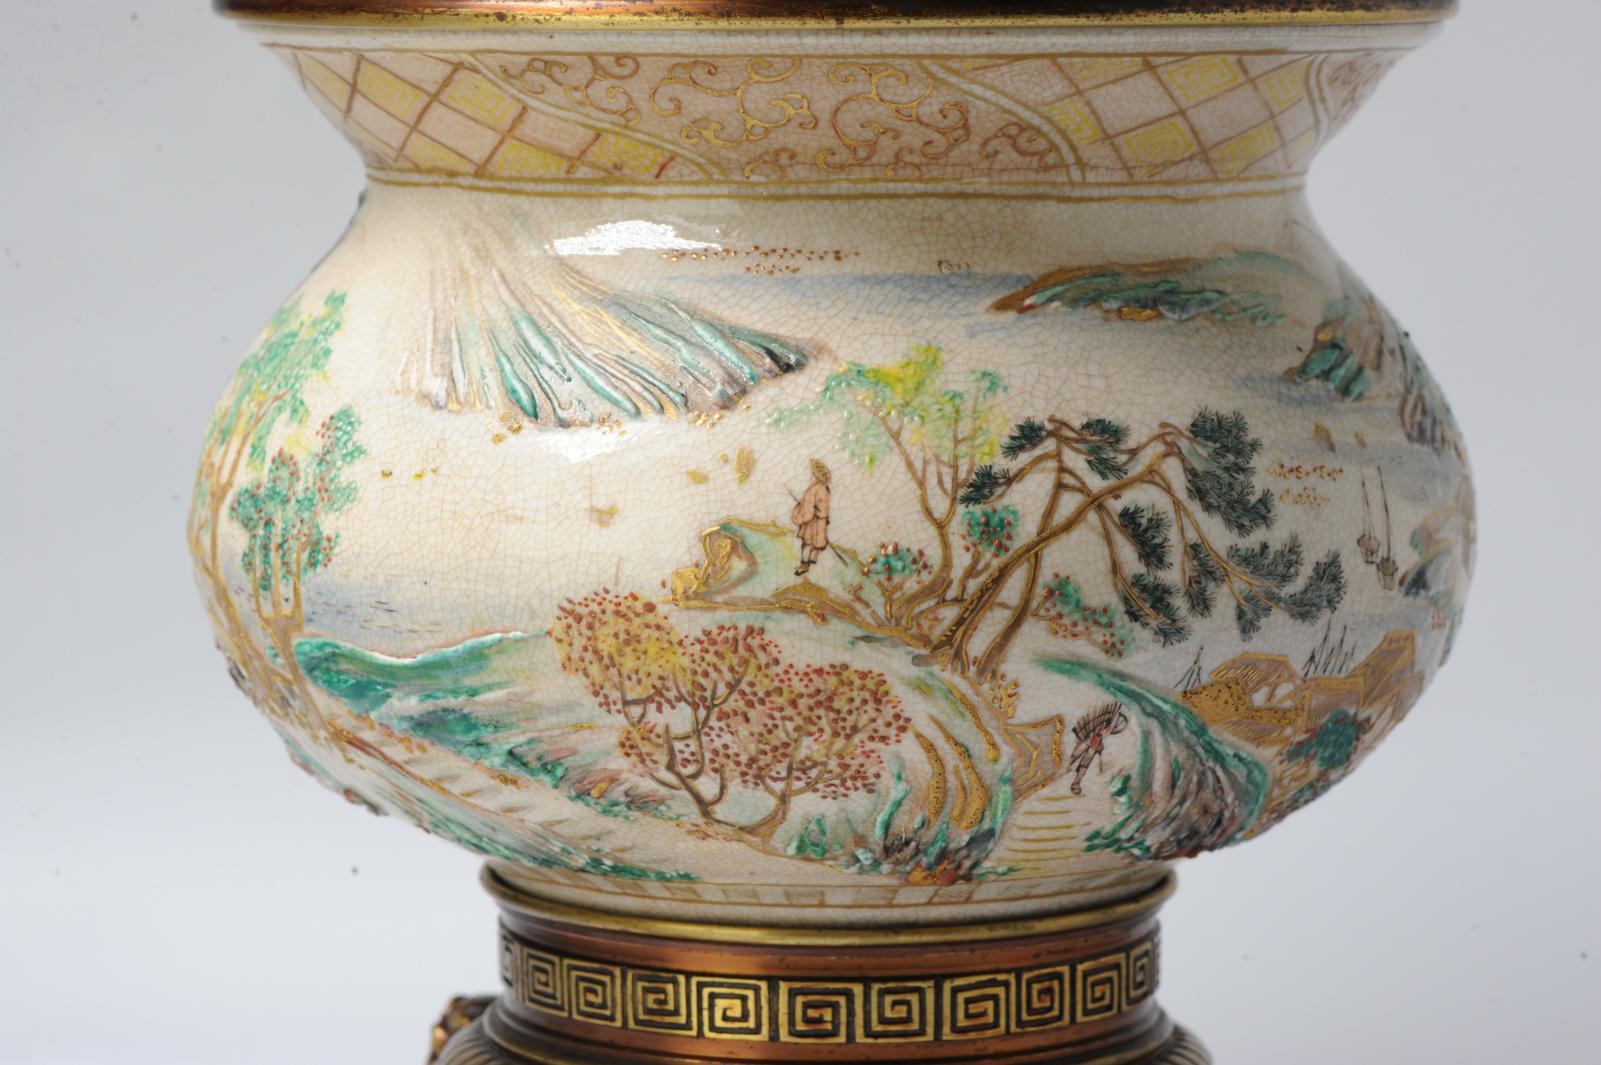  Antique Beautiful Japanese Satsuma Bowl Lndscape Oromulu Japan Porcelain 19C For Sale 2